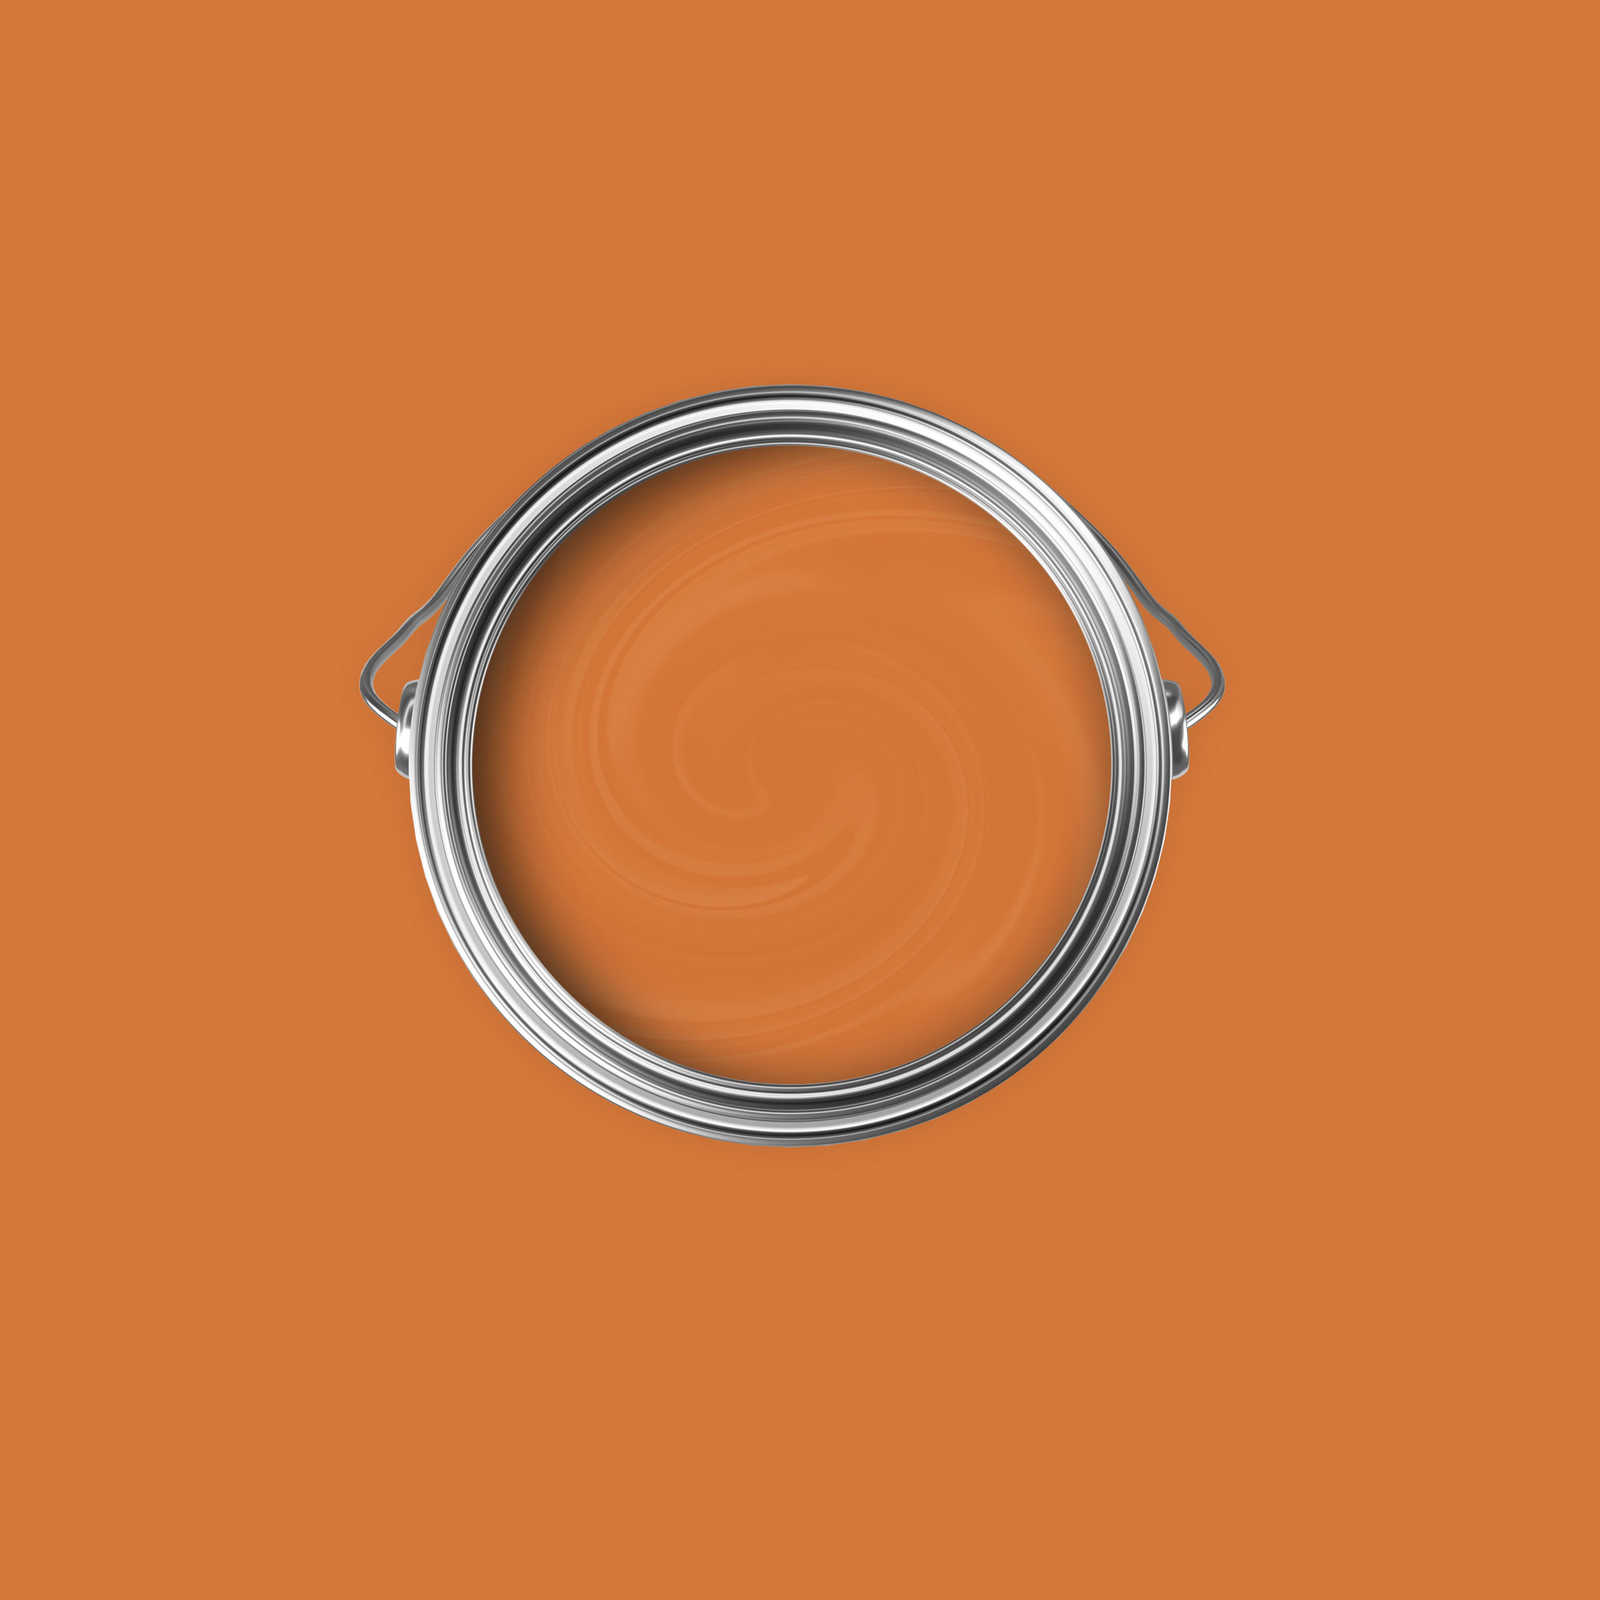             Premium Wandfarbe warmherziges Orange »Pretty Peach« NW903 – 2,5 Liter
        